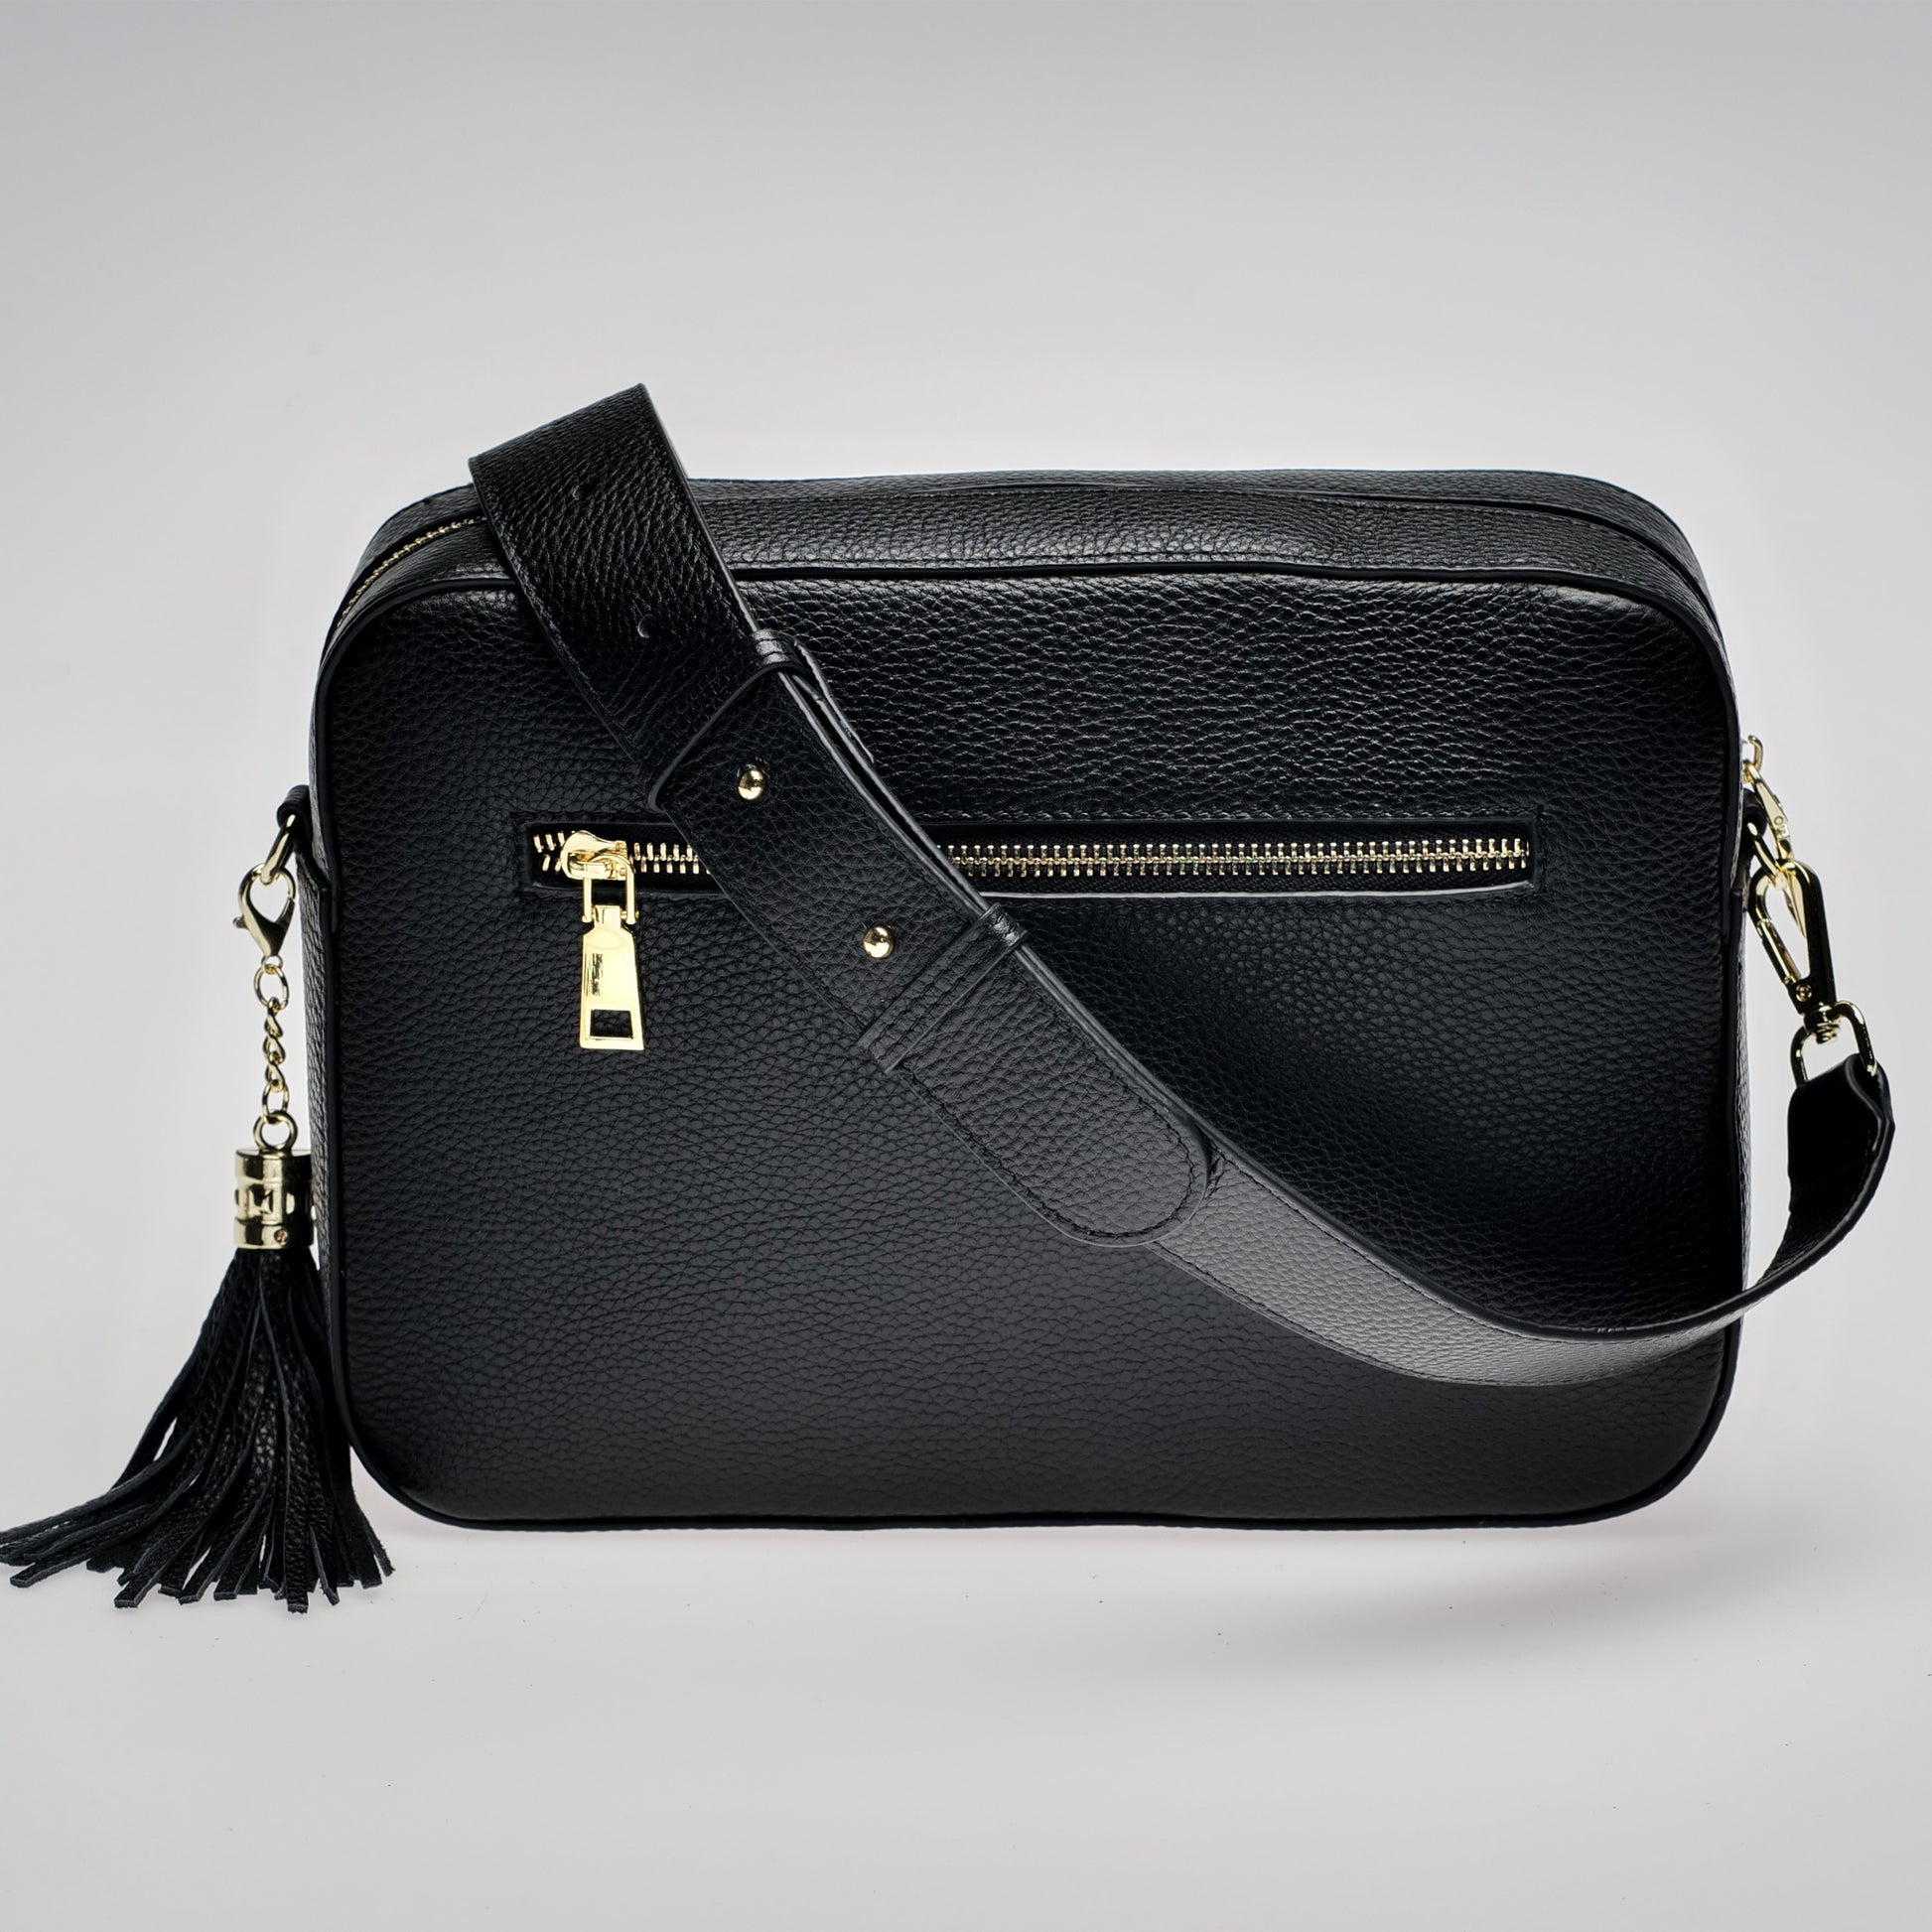 Stratford XL Crossbody Bag - Midnight Black with Matching Leather Strap